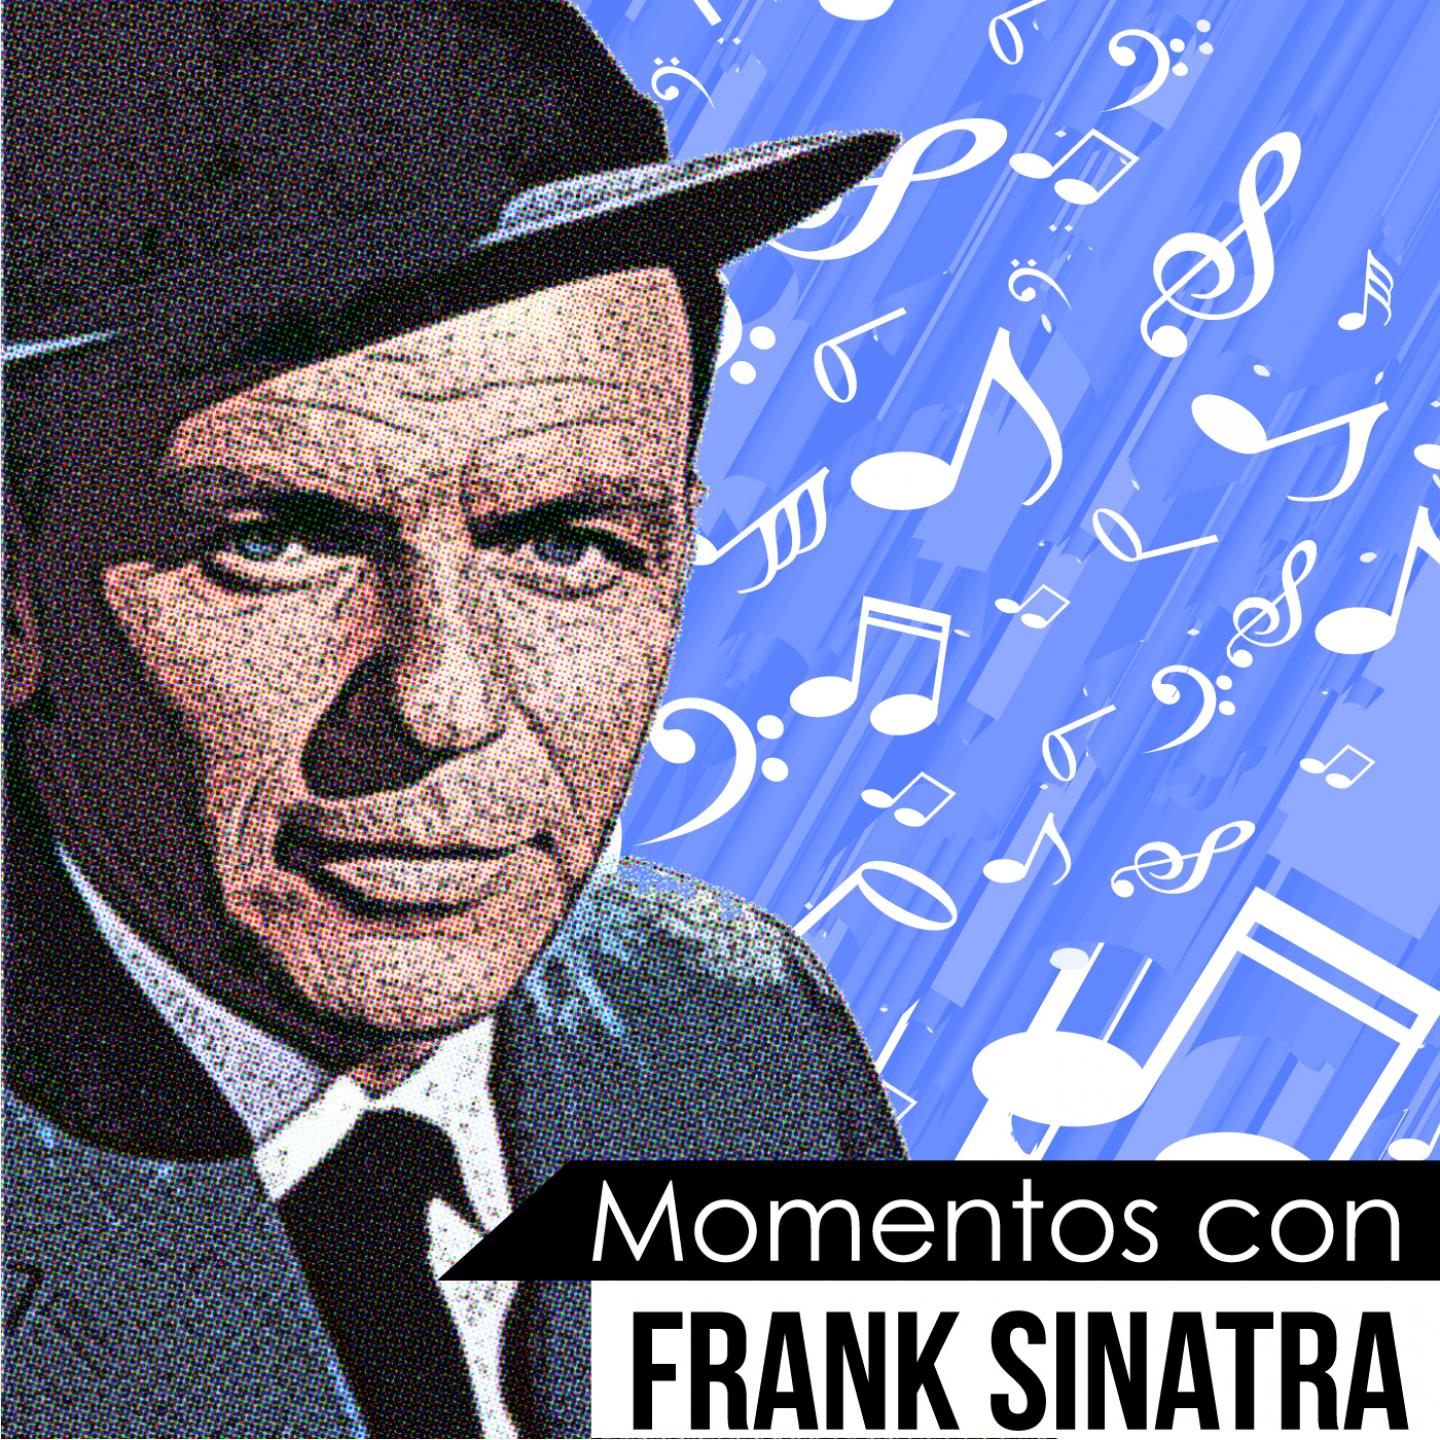 Strangers in the Night (Momentos Con Frank Sinatra)